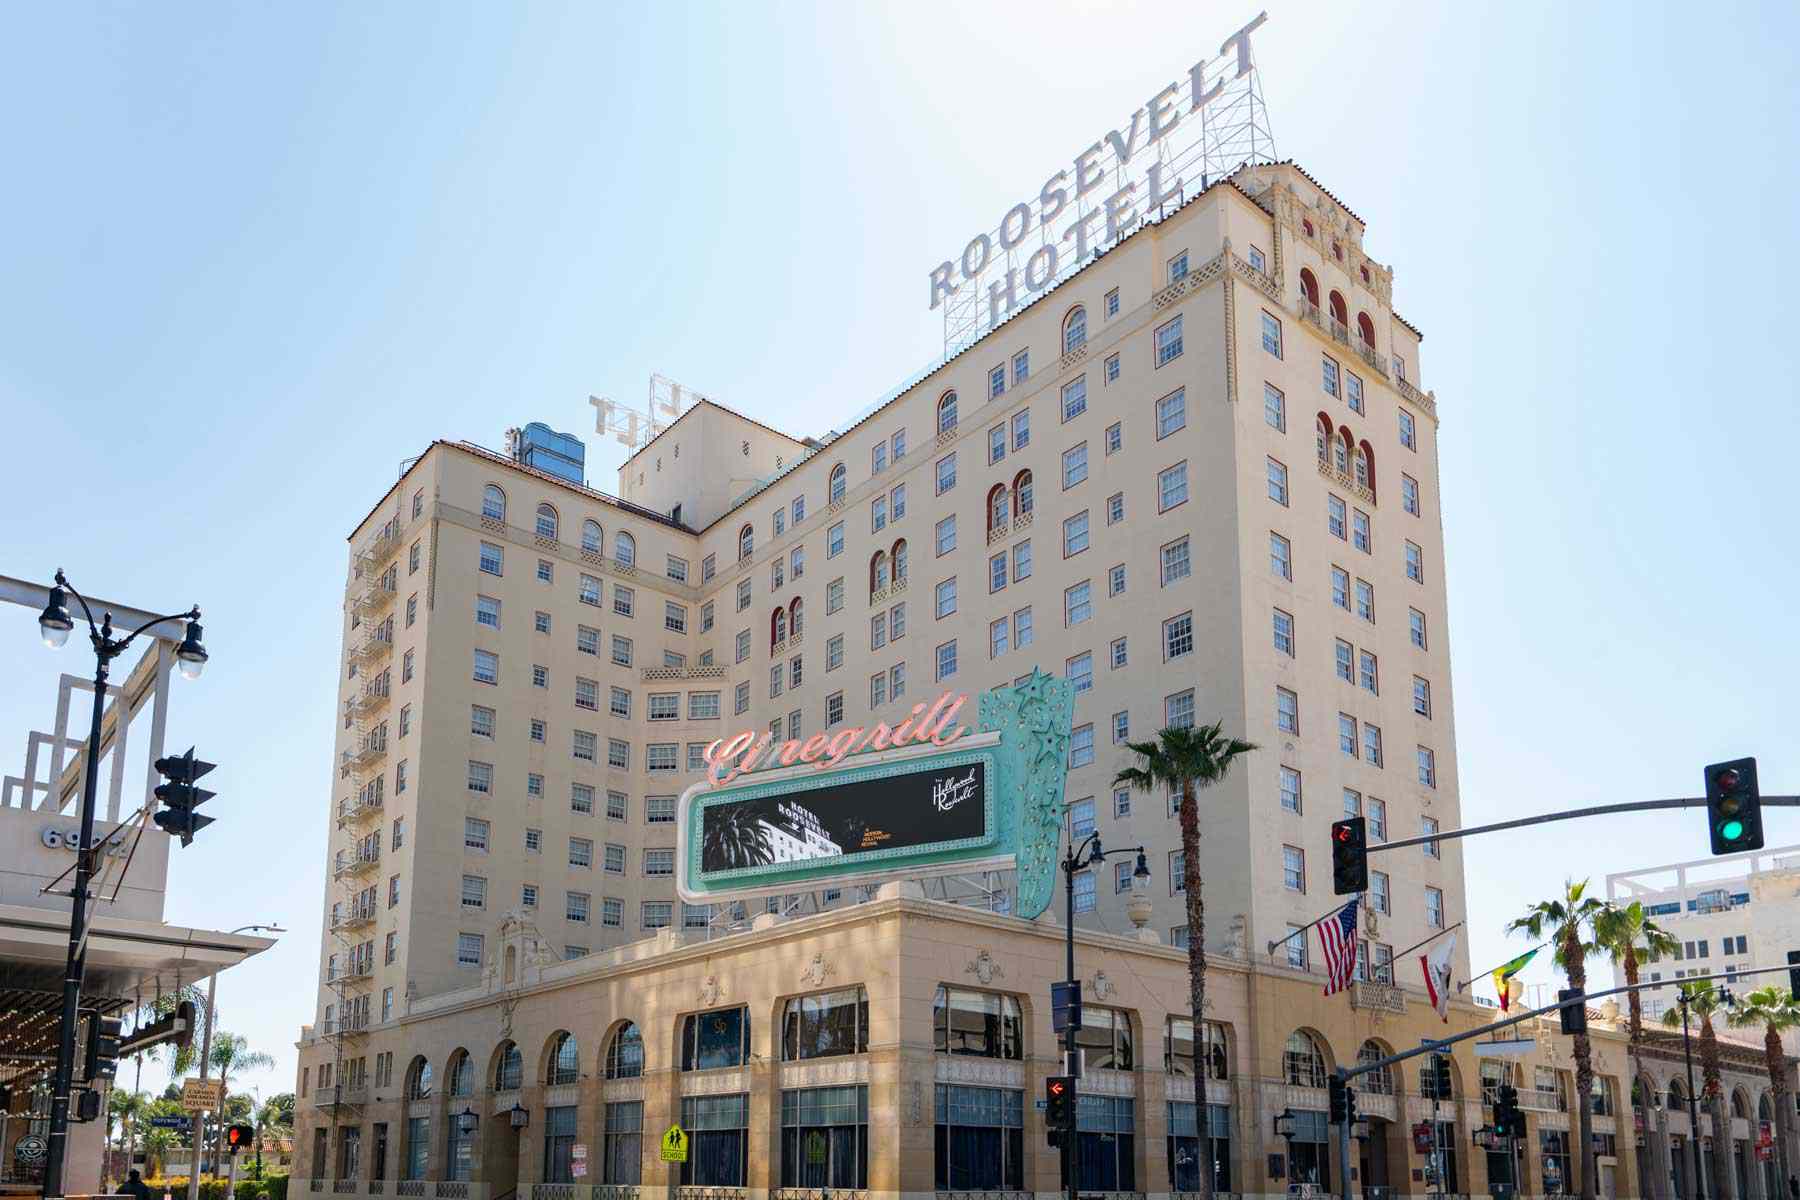 Une vue de l'hôtel The Hollywood Roosevelt sur Hollywood Blvd